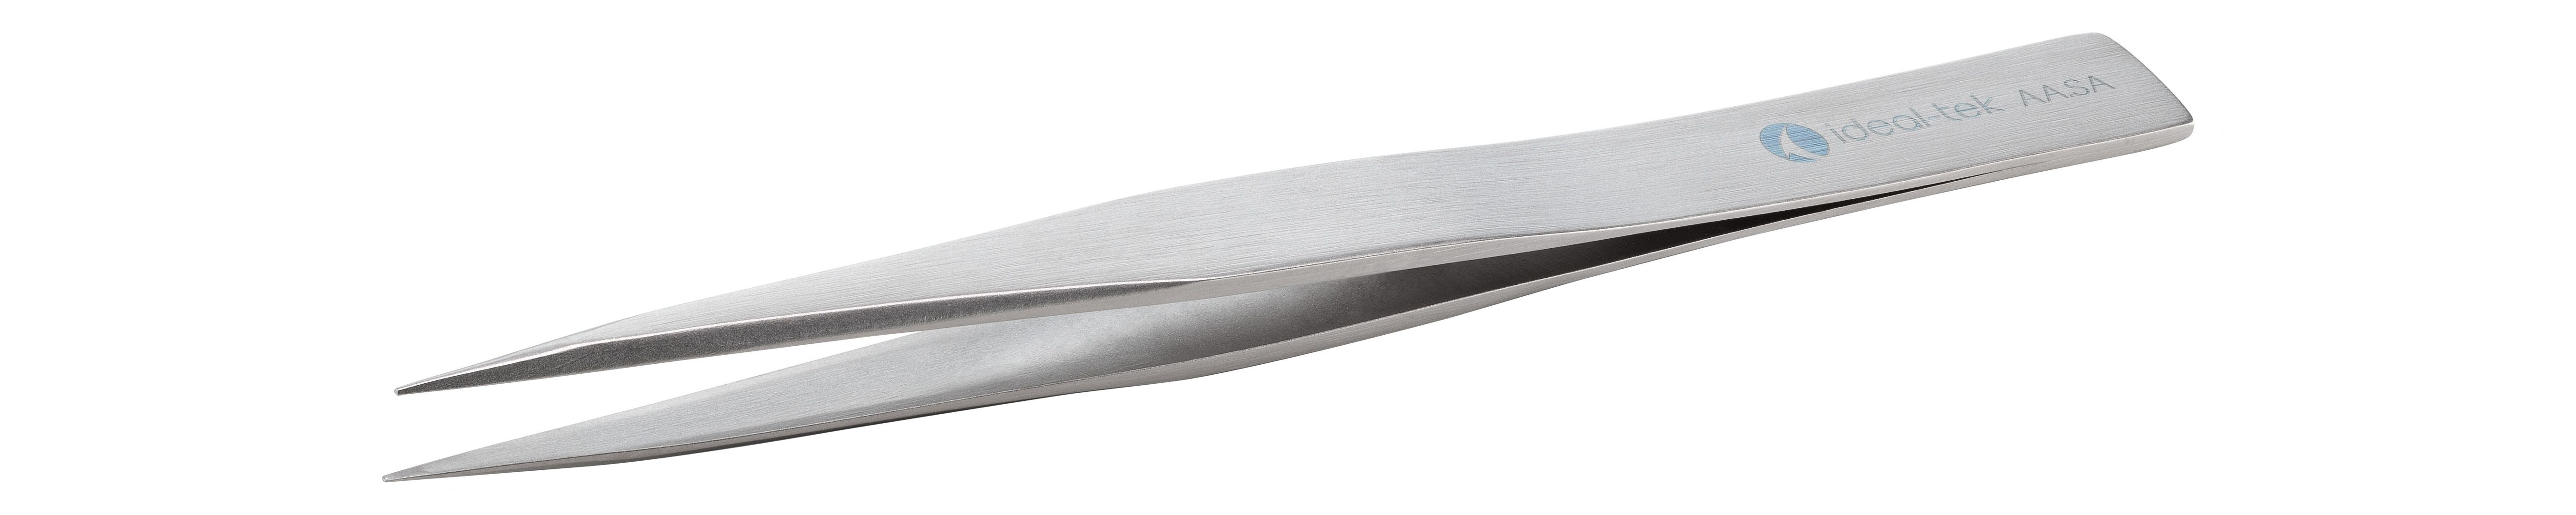 ideal-tek 130 mm, Stainless Steel, Straight Fine, Tweezers